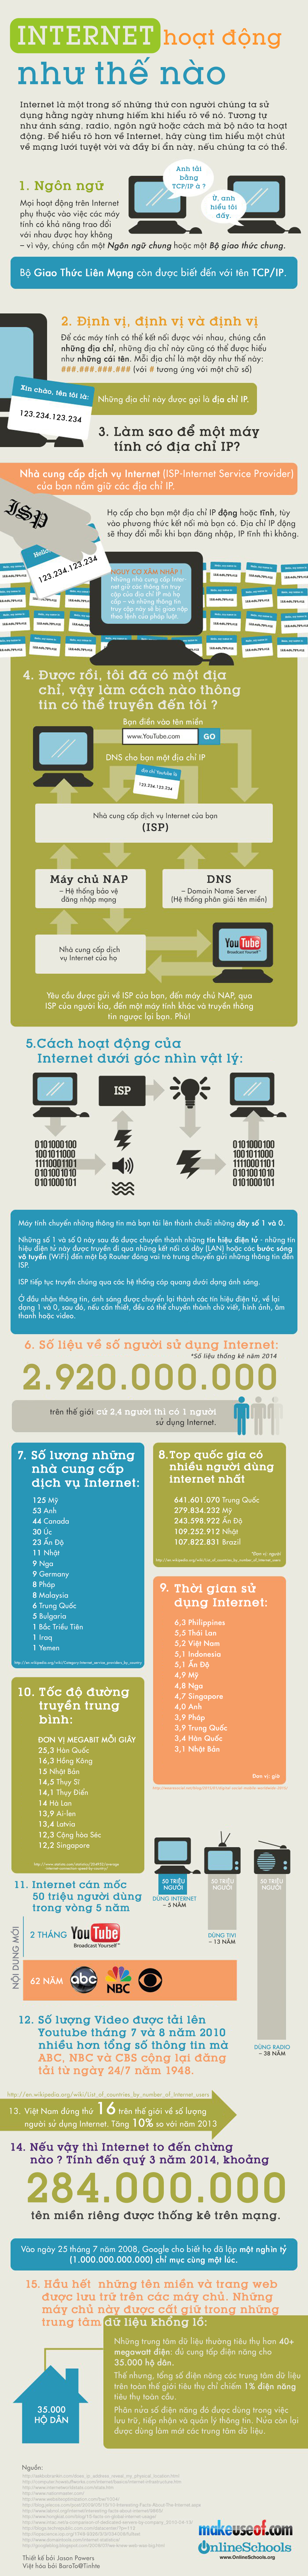 [Infographic] Internet hoat dong nhu the nao.jpg